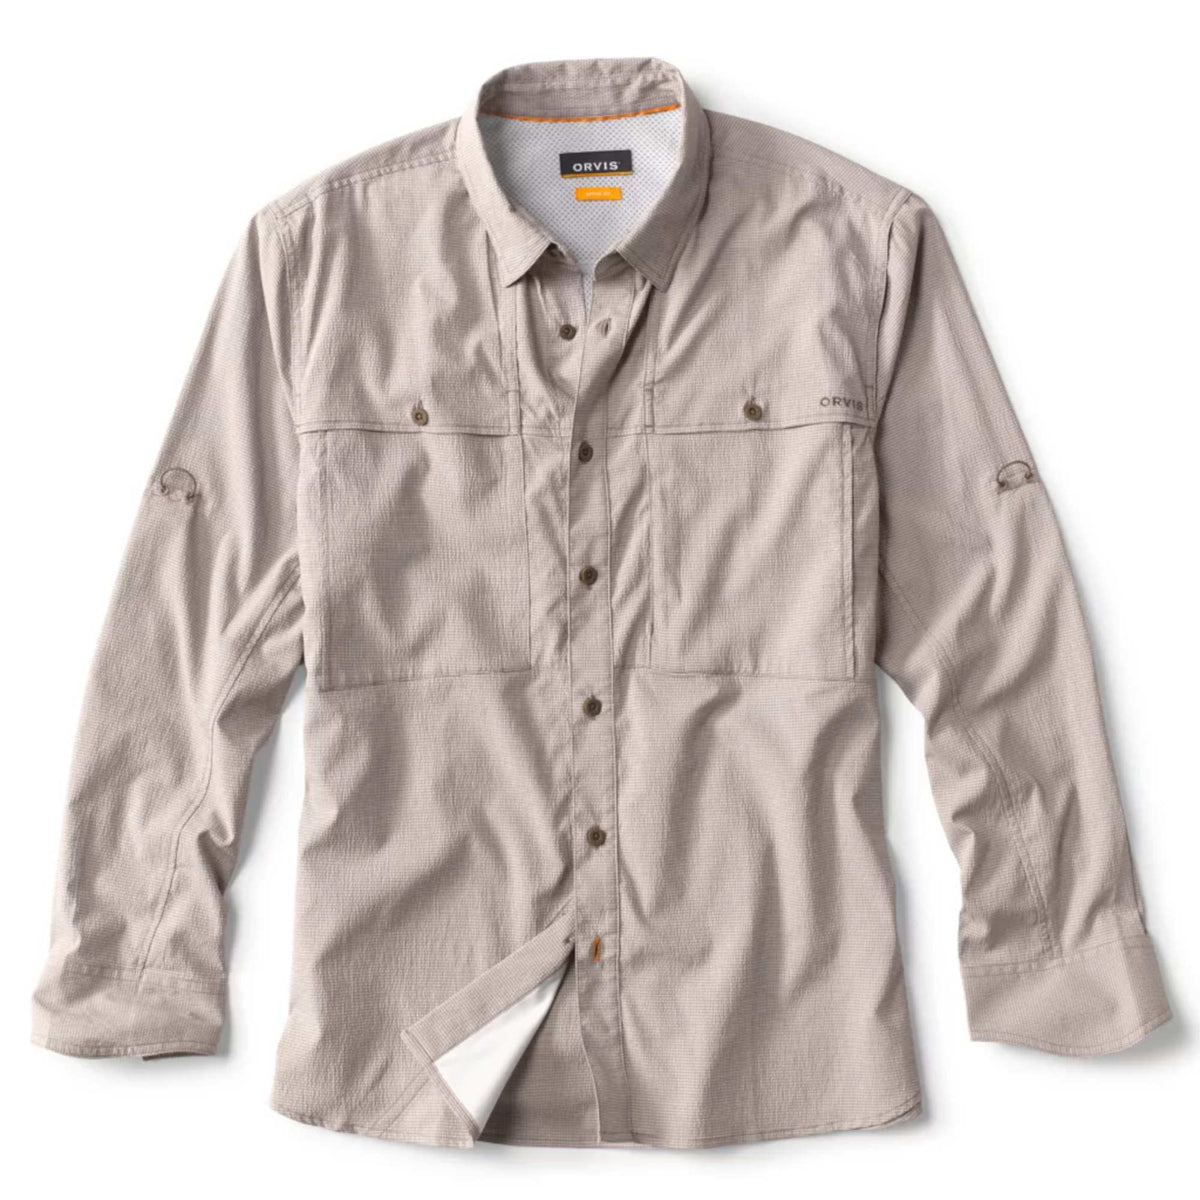 Orvis OutSmart Tech Chambray Long Sleeve Shirt - Men's